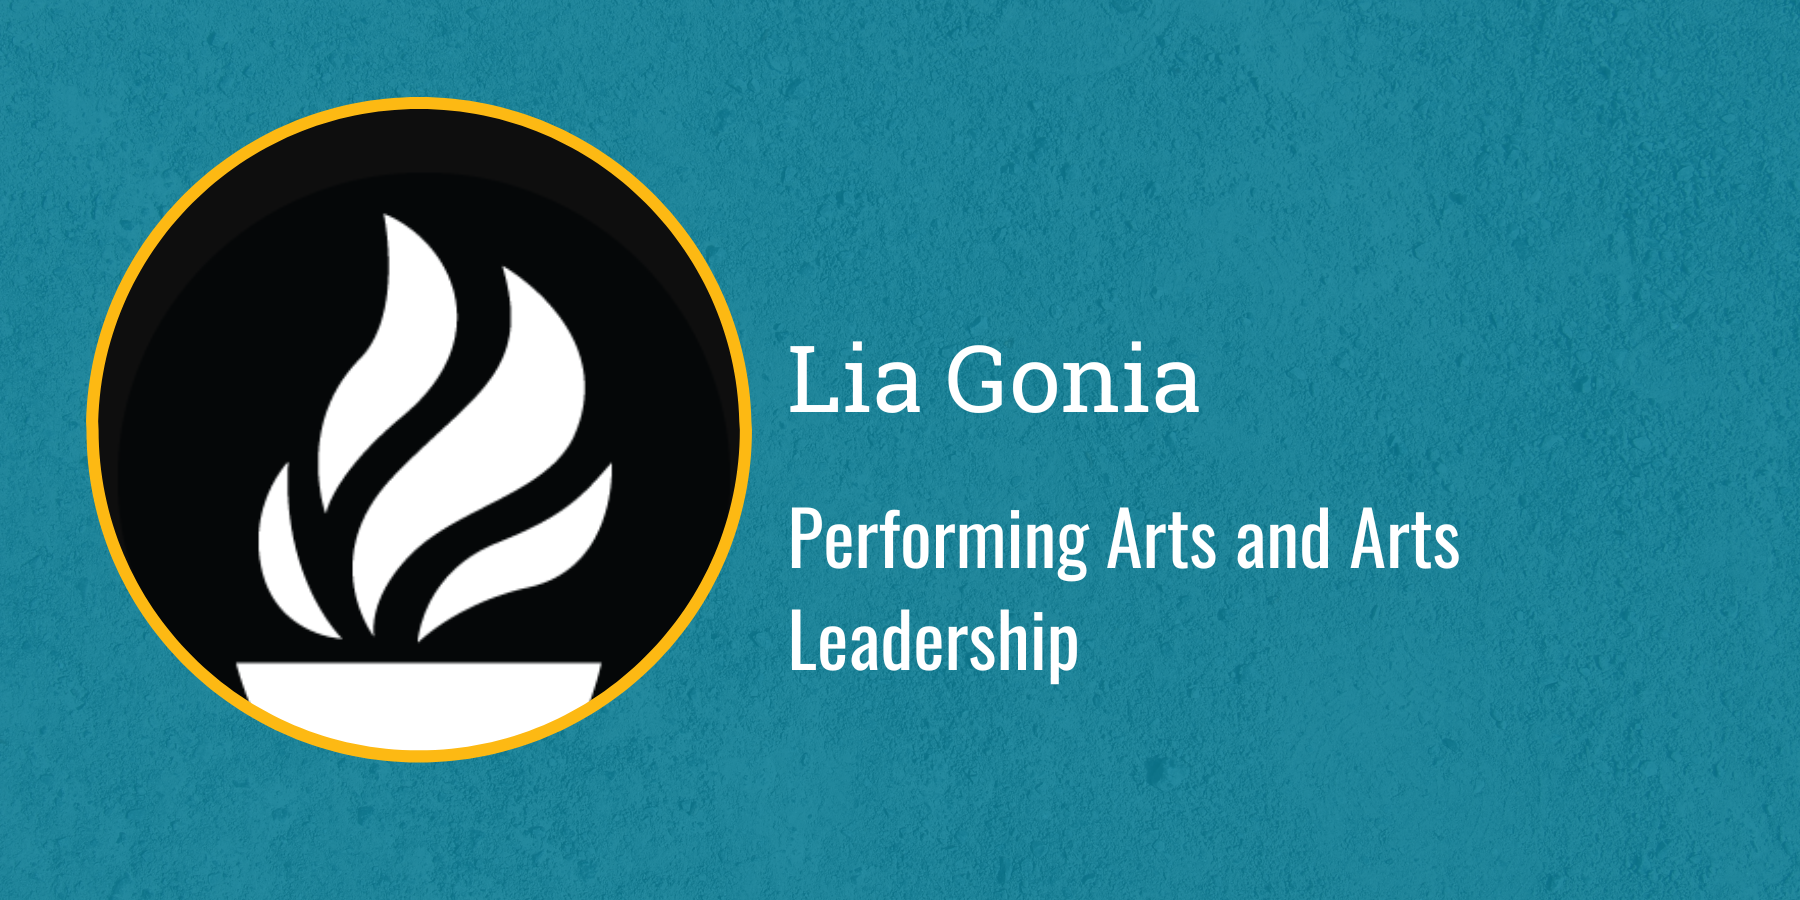 Lia Gonia
Performing Arts and Arts Leadership 